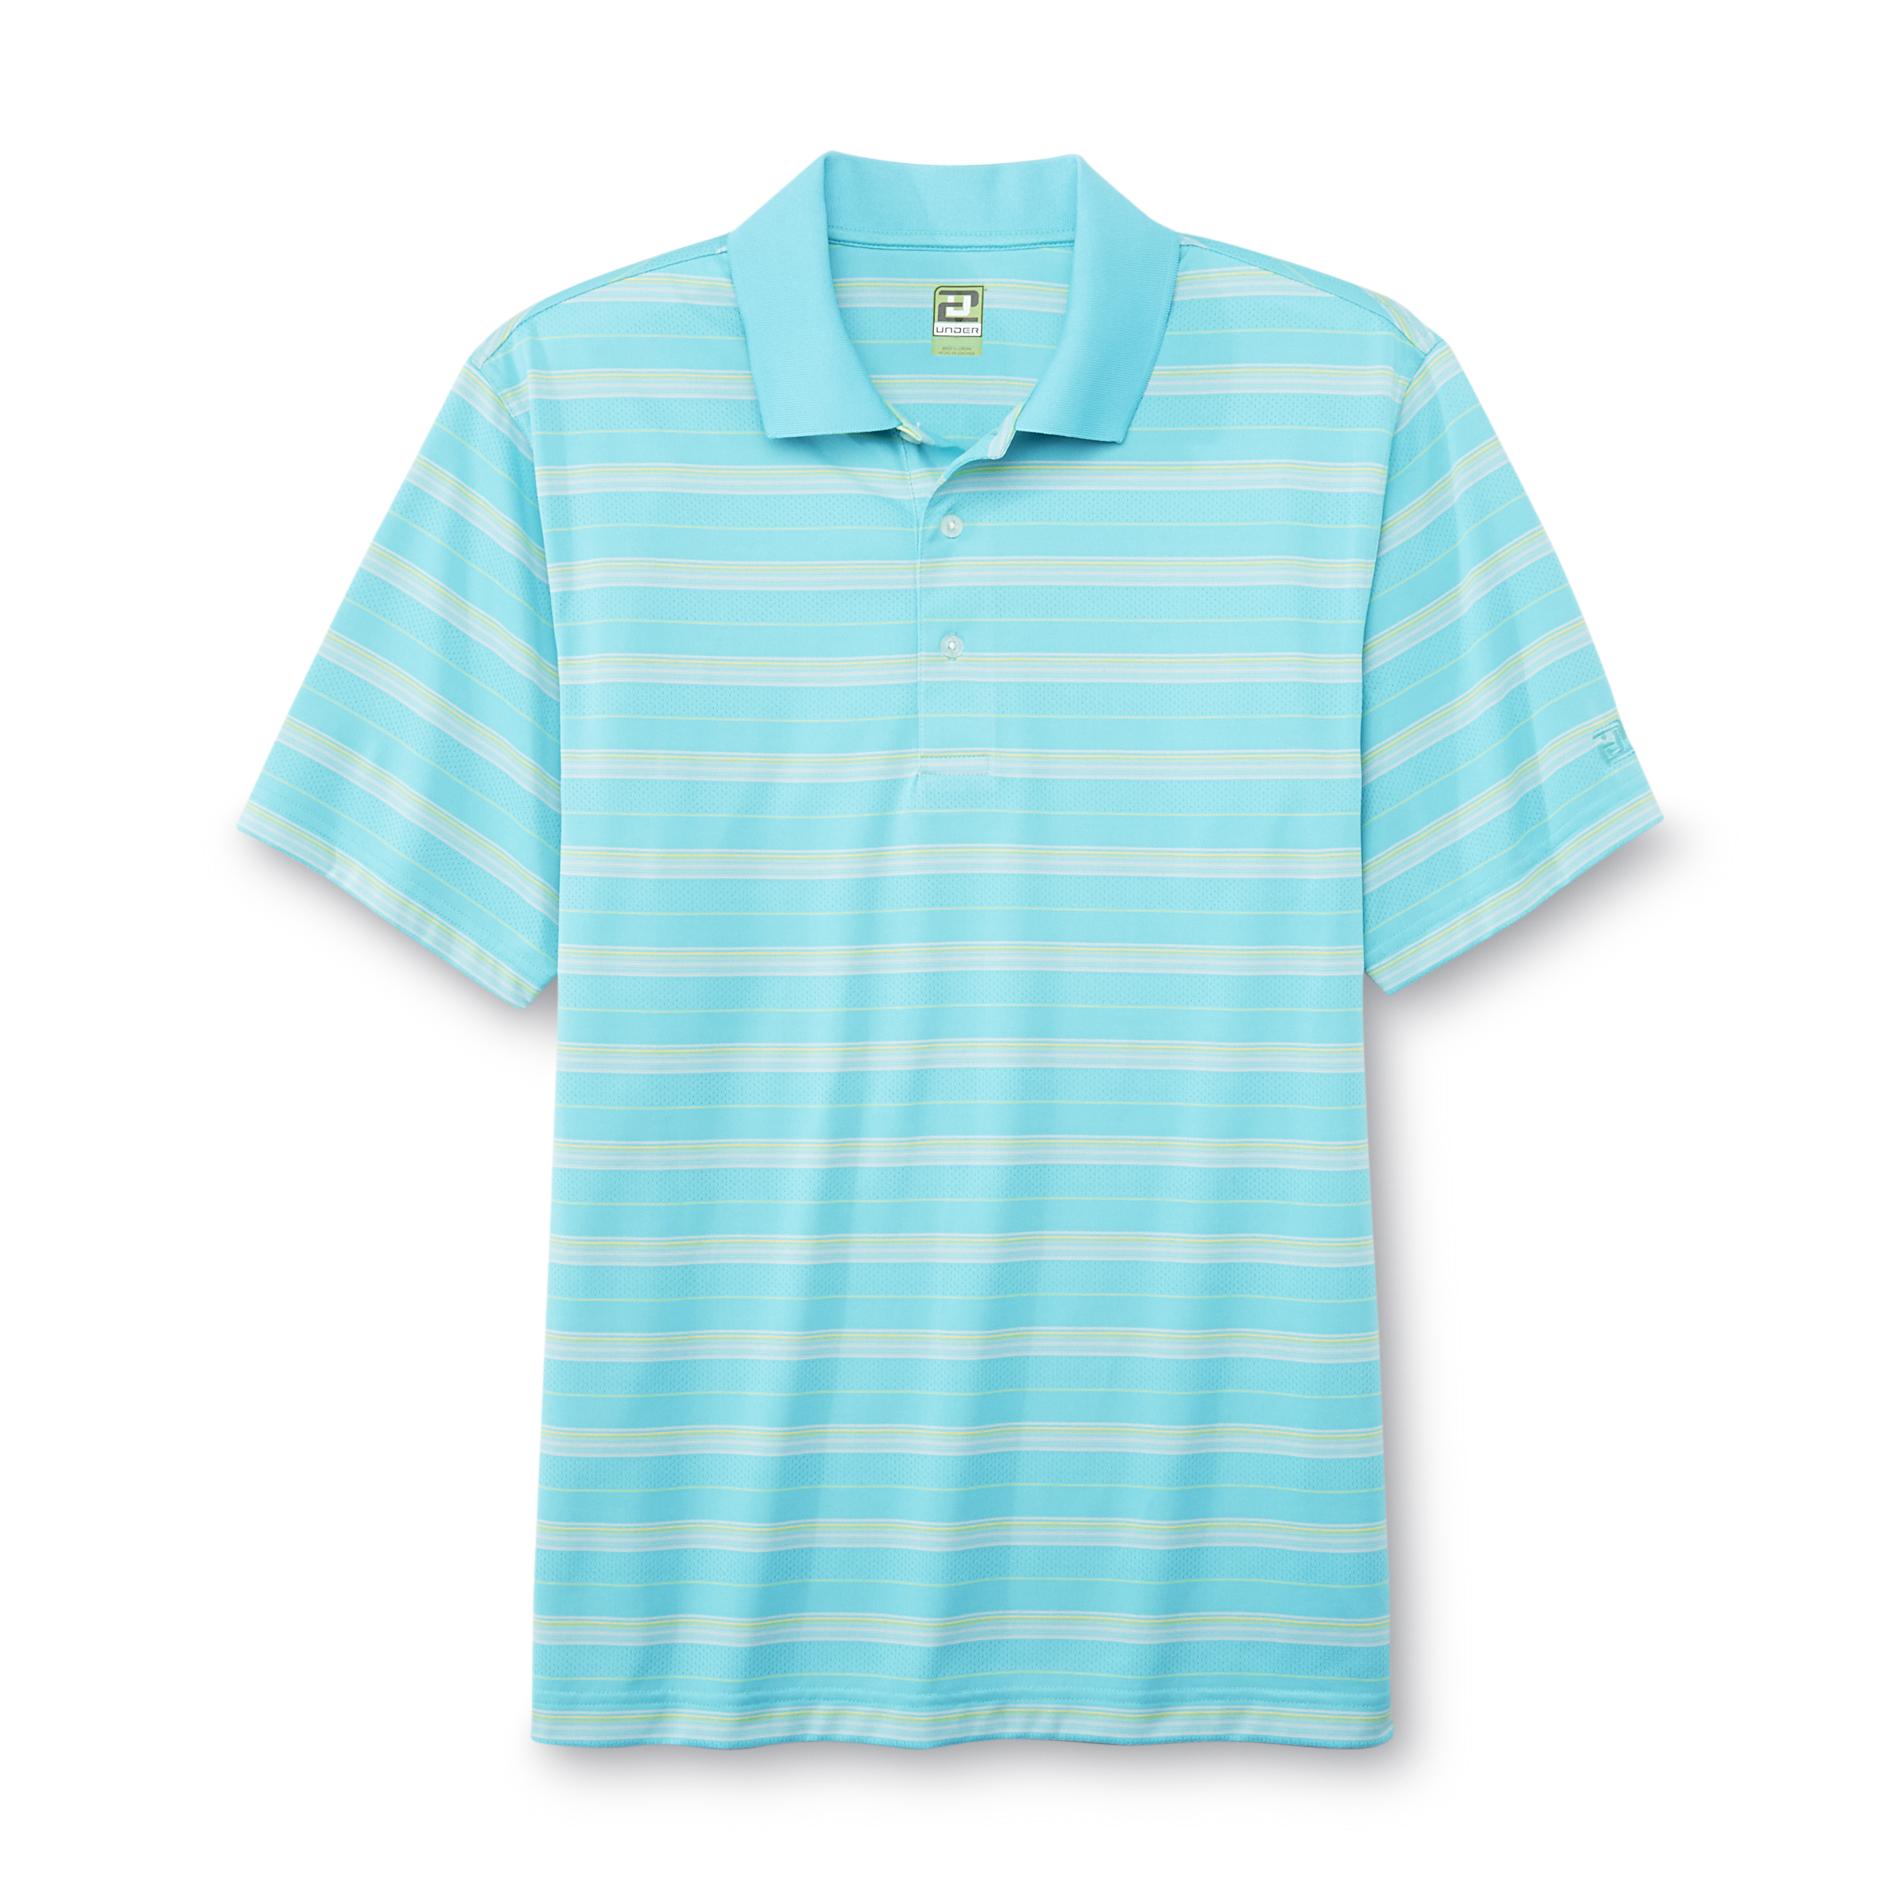 2Under Men's Mesh Performance Golf Shirt - Striped